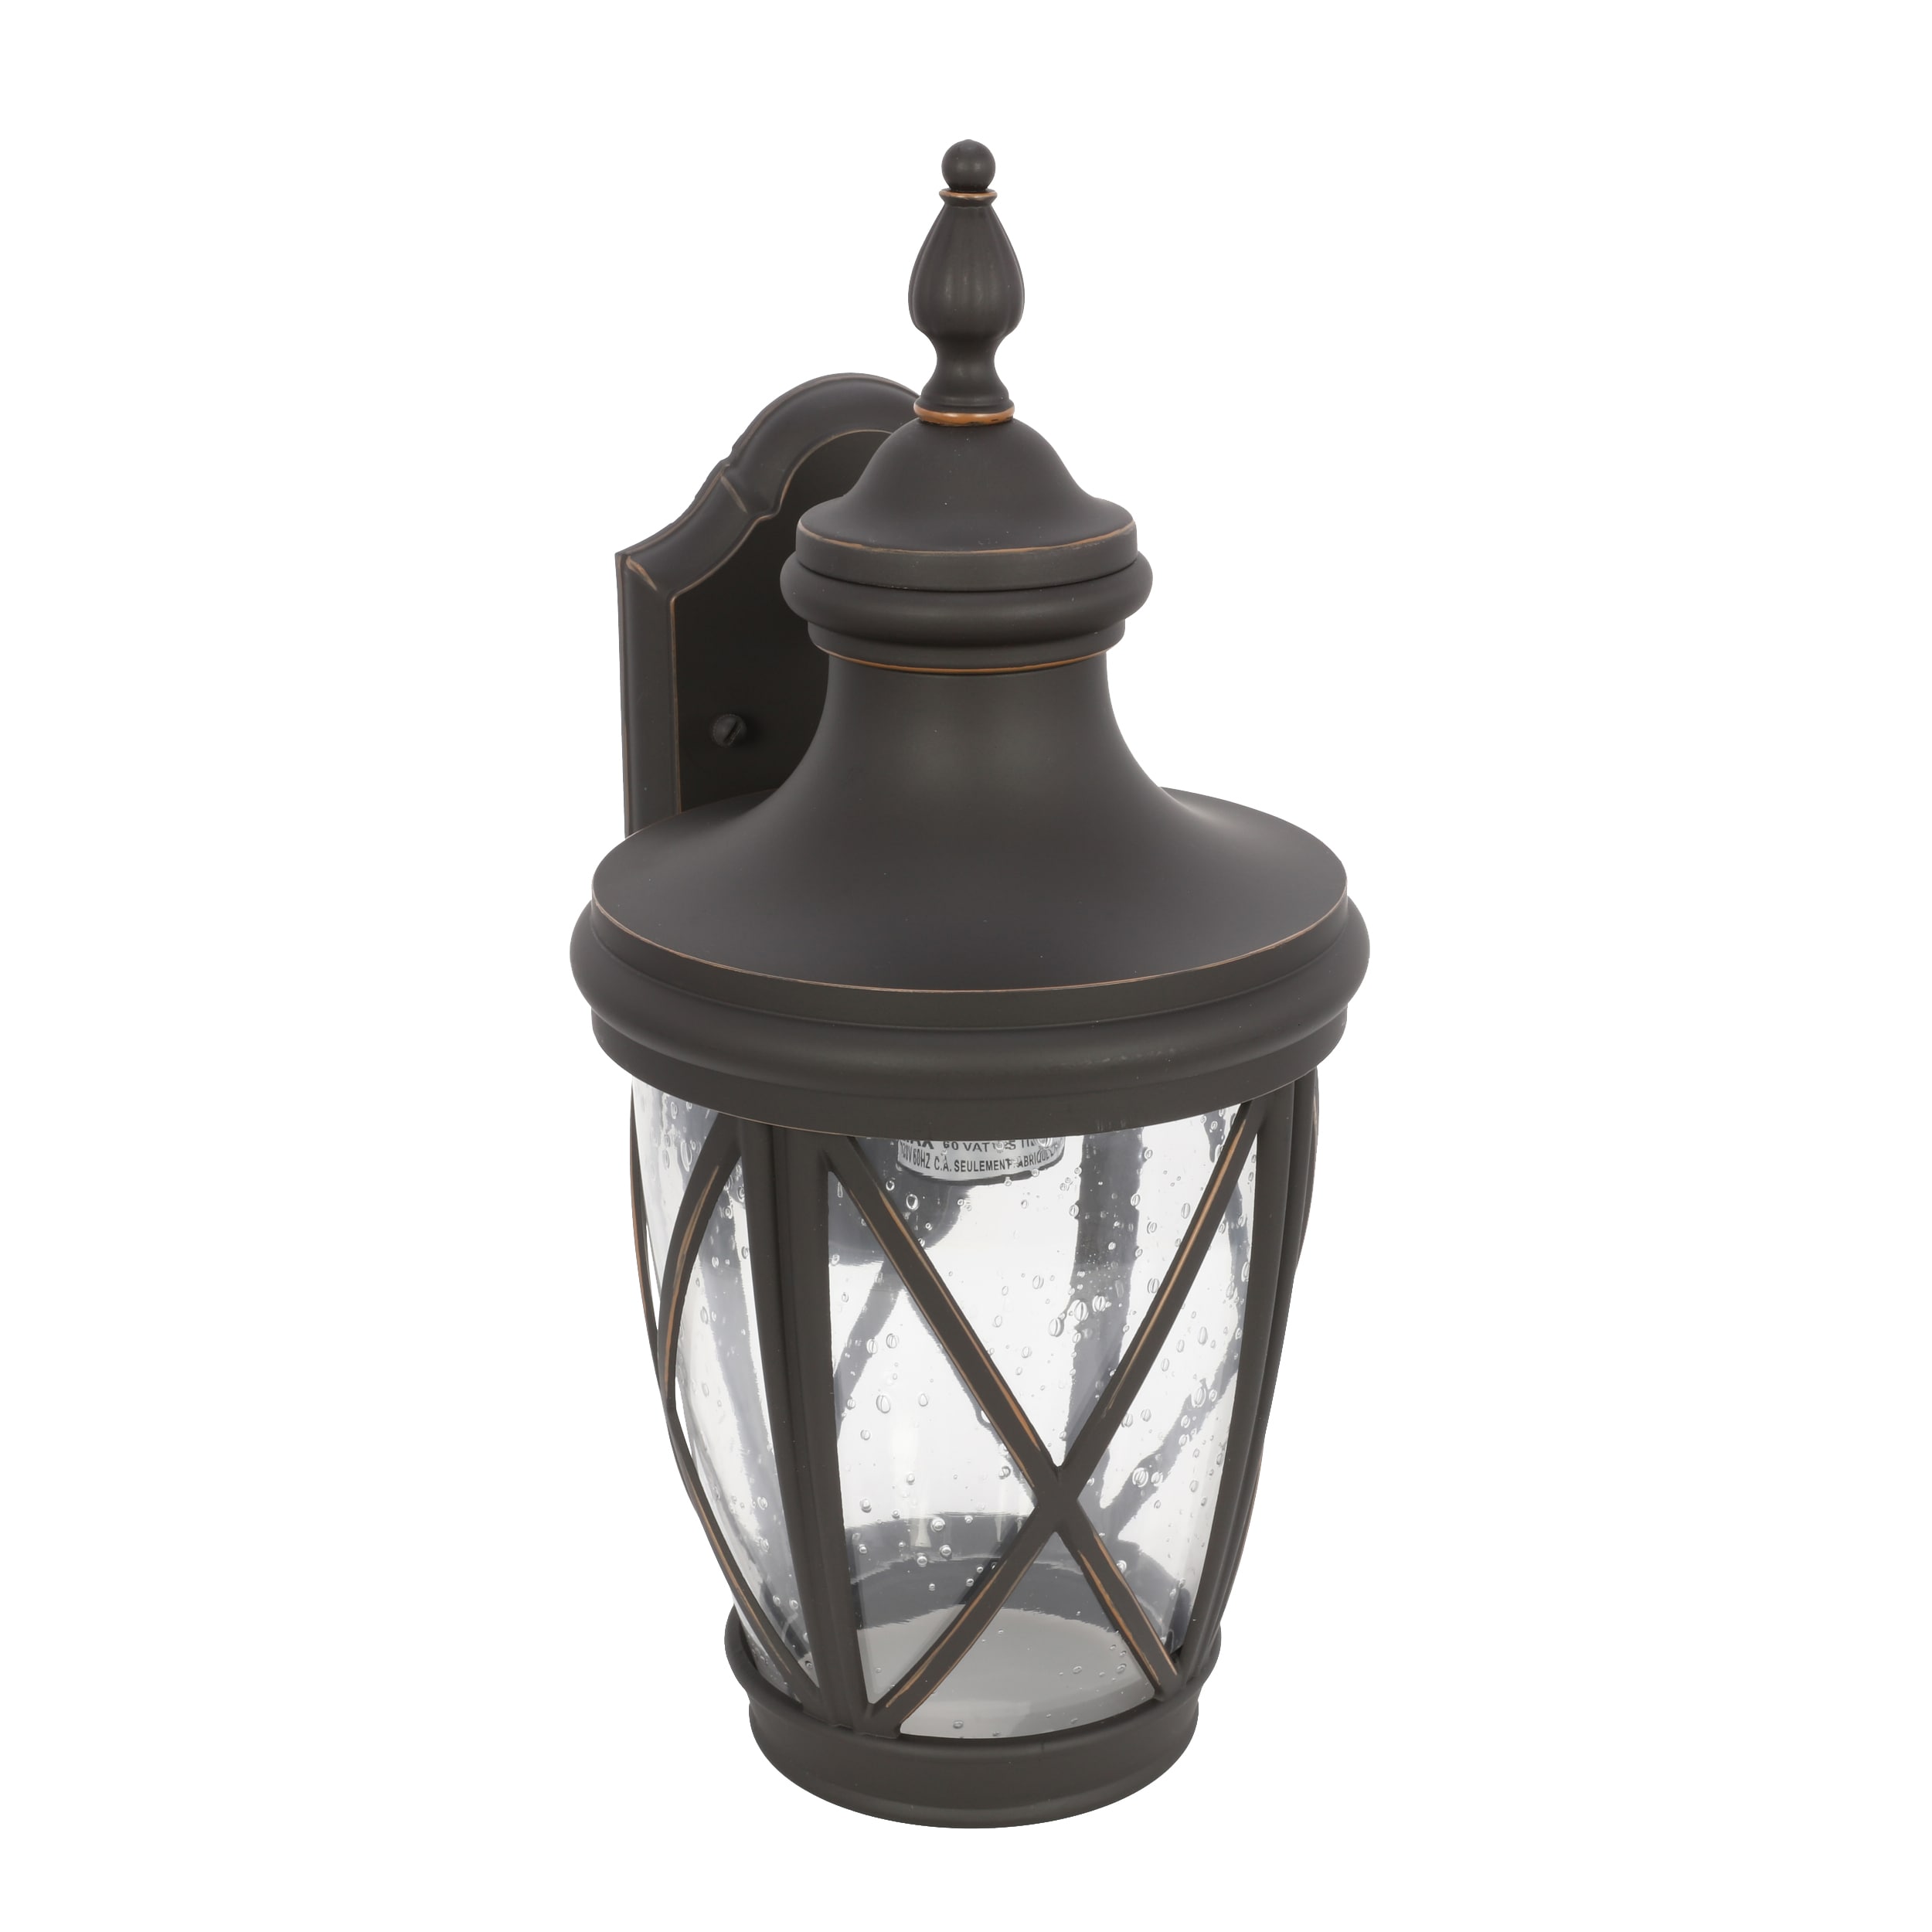 2PK Oil Rubbed Bronze Outdoor Exterior Wall Lantern Light Fixture Sconce 